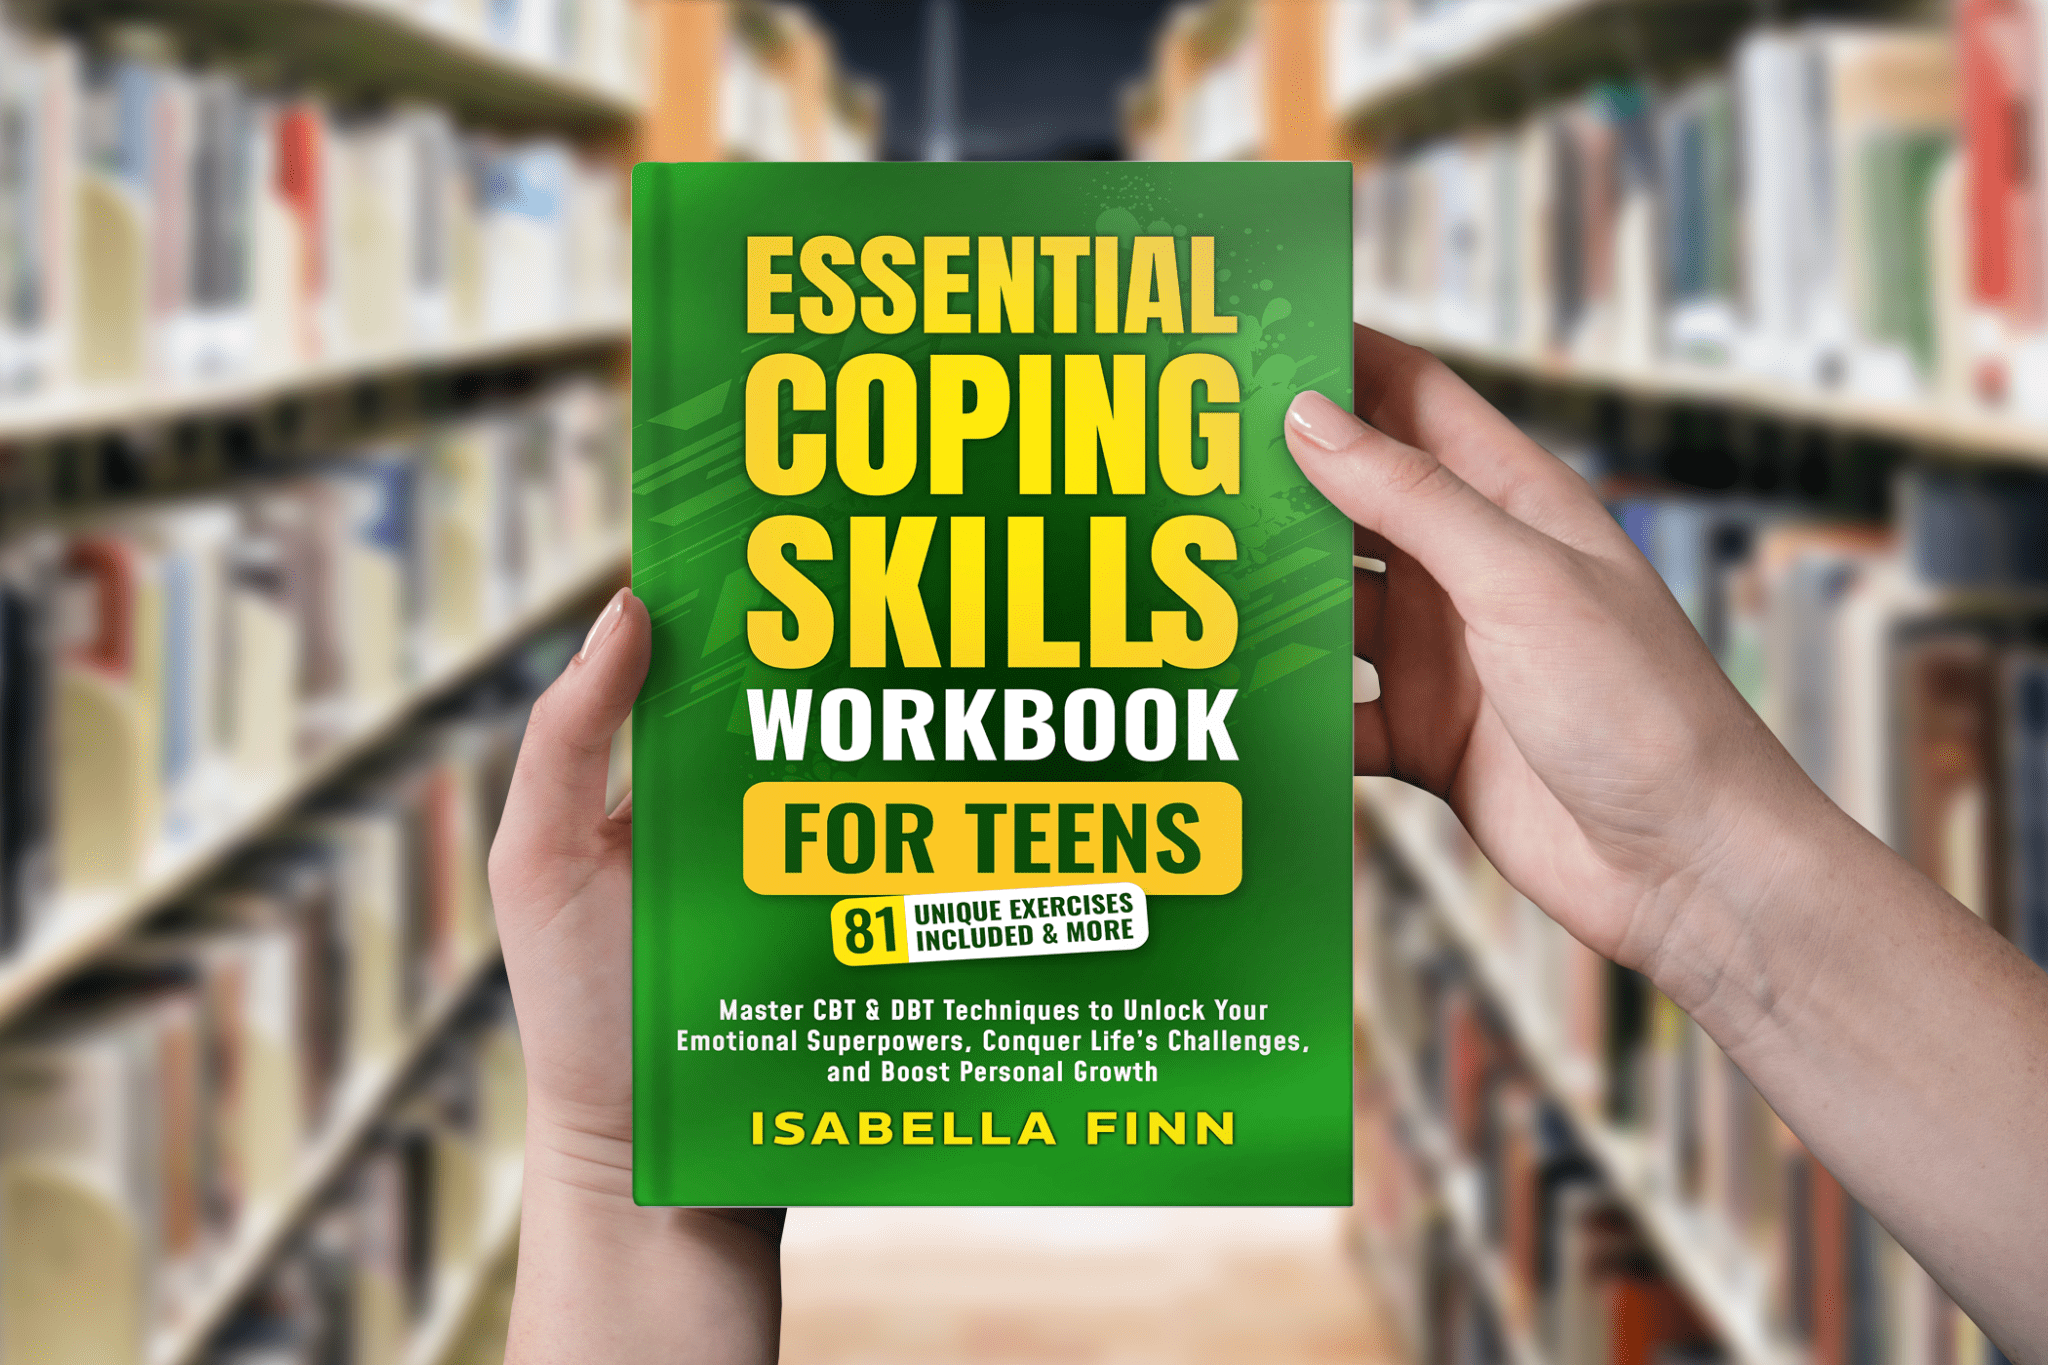 coping skills for teens, coping methods, workbook for teens, mental health for teens